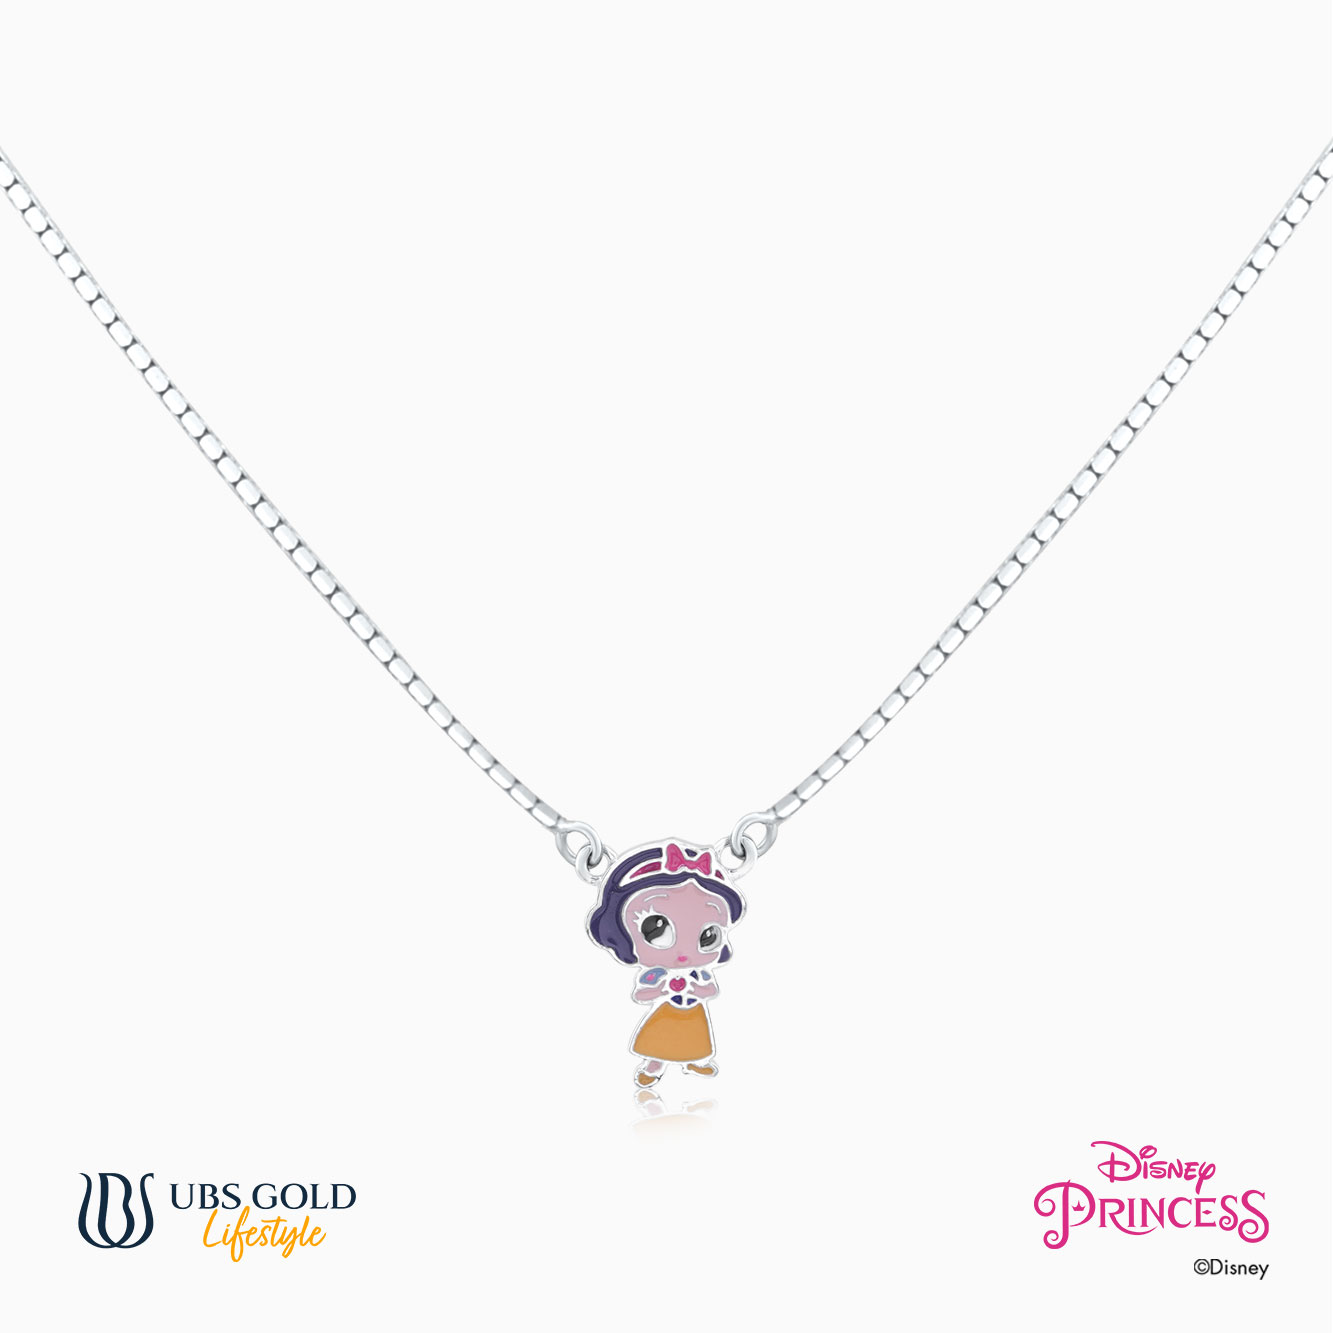 UBS Kalung Emas Anak Disney Princess Snow White - Kky0328 - 17K